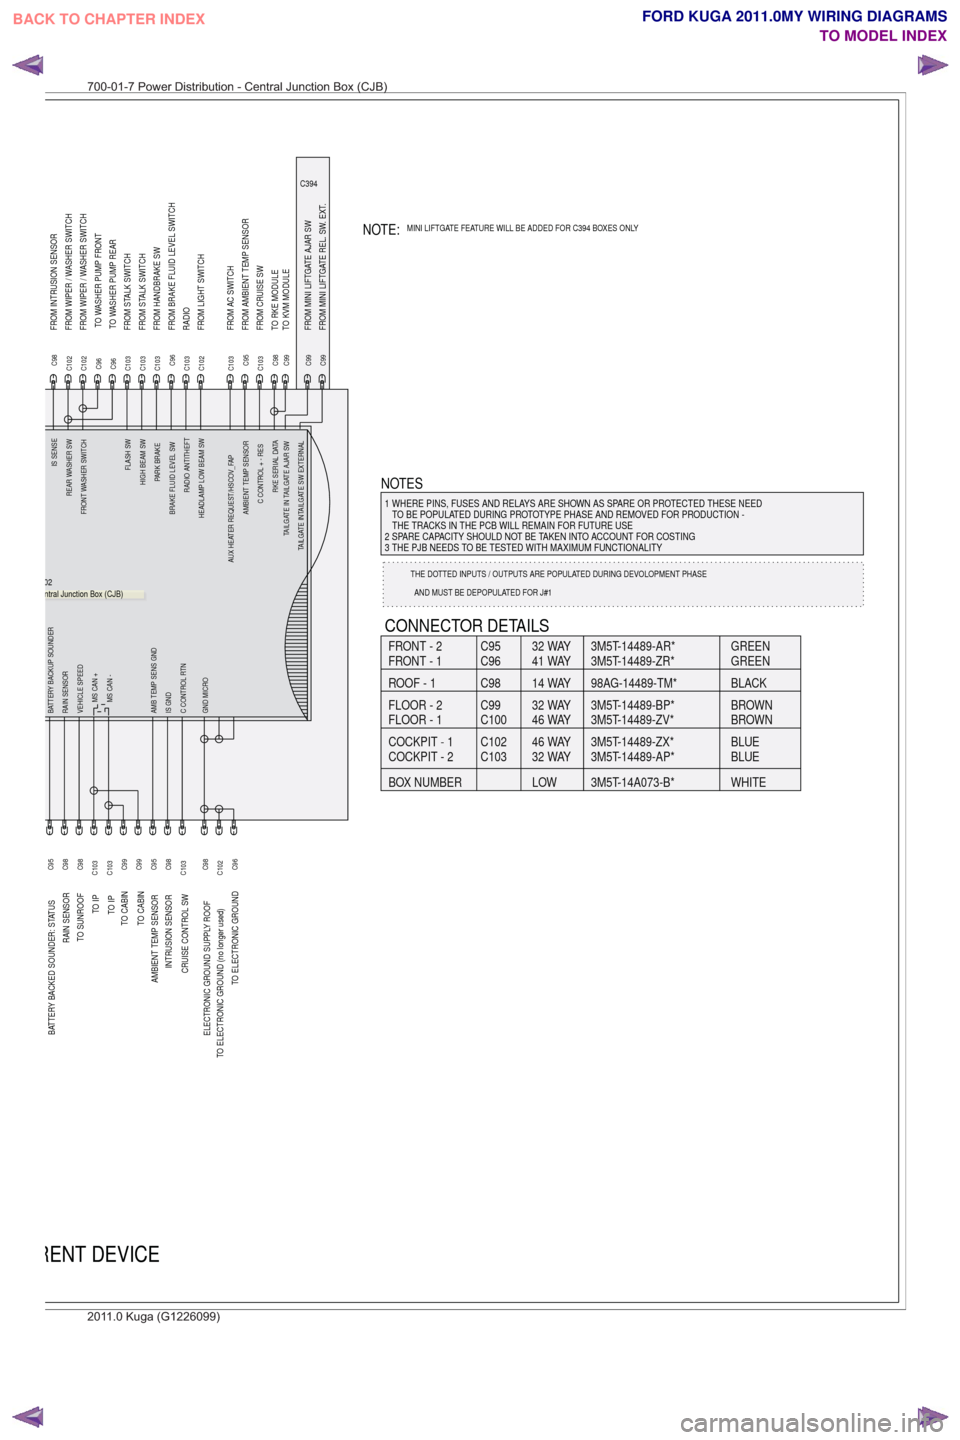 FORD KUGA 2011 1.G Wiring Diagram Manual PDF C394
TO ELECTRONIC GROUND (no longer used)BATTERY BACKED SOUNDER: STATUS
RAIN SENSORTO SUNROOF
AMBIENT TEMP SENSOR INTRUSION SENSOR
CRUISE CONTROL SW
ELECTRONIC GROUND SUPPLY ROOF
TO ELECTRONIC GROUND